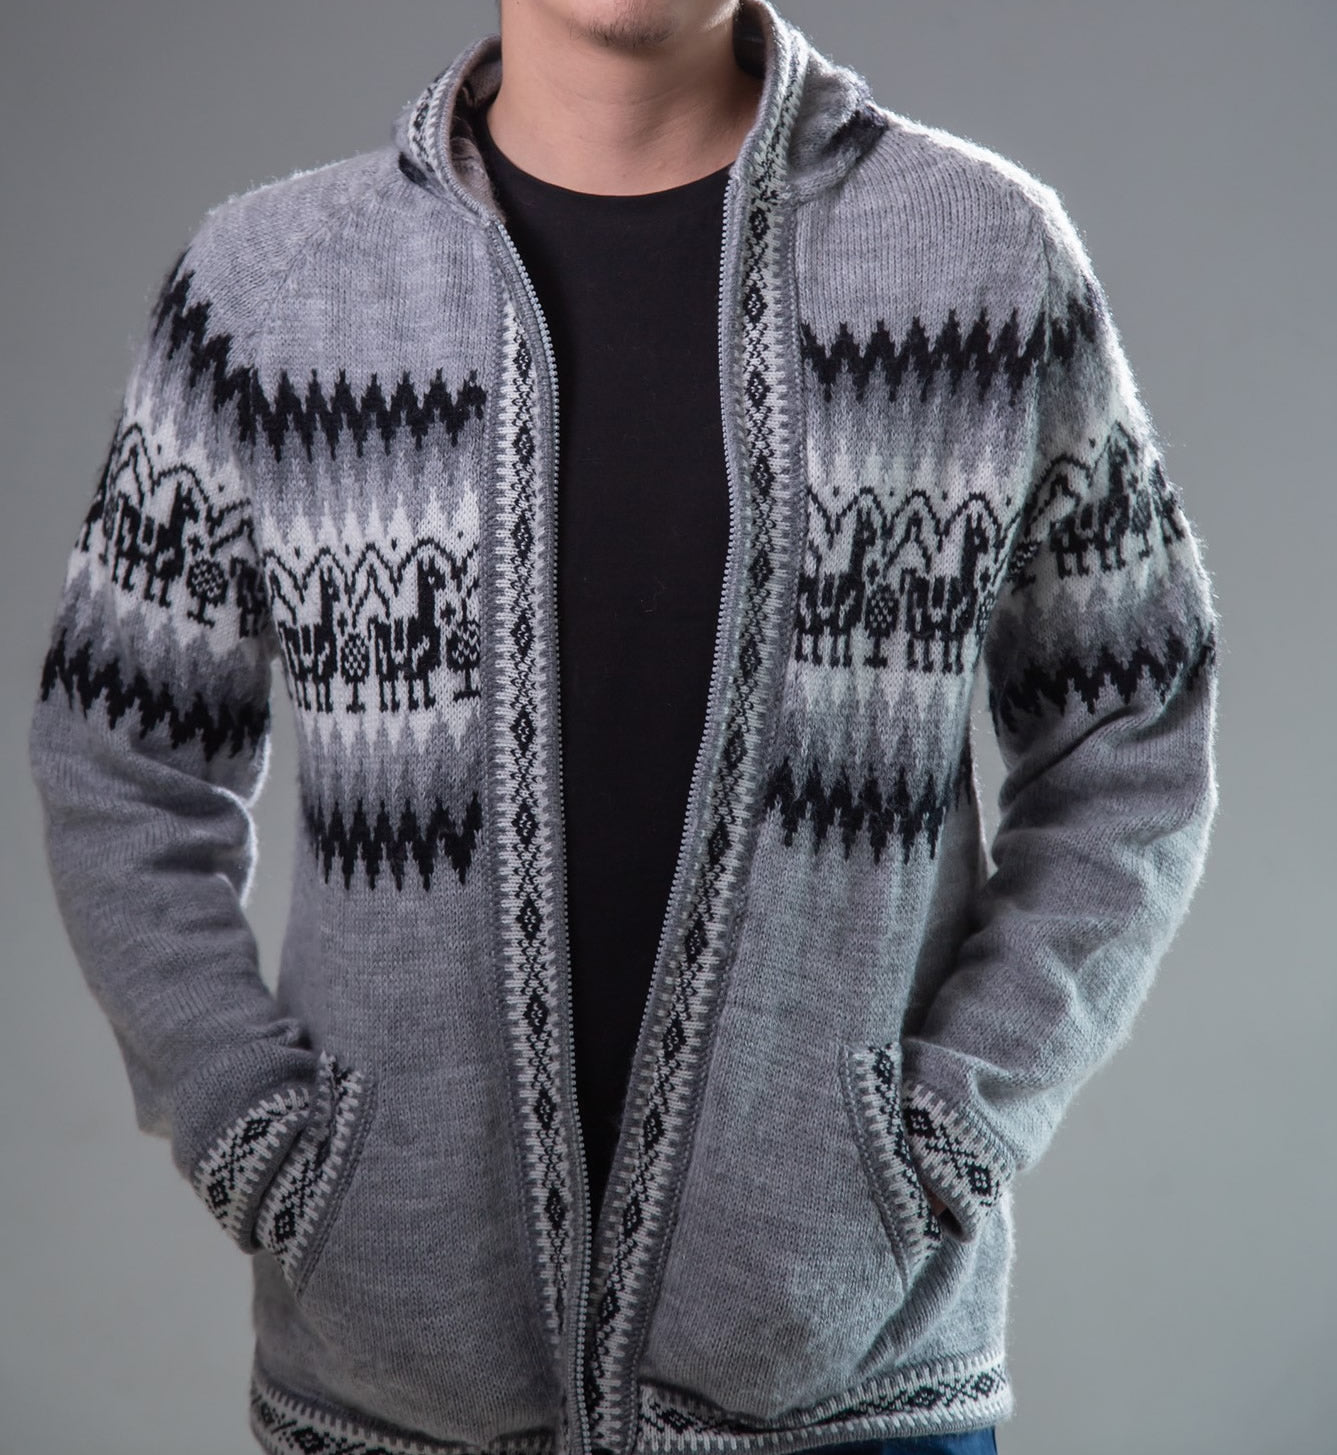 Alpaca Wool Knitted Jacket Sweater Gray